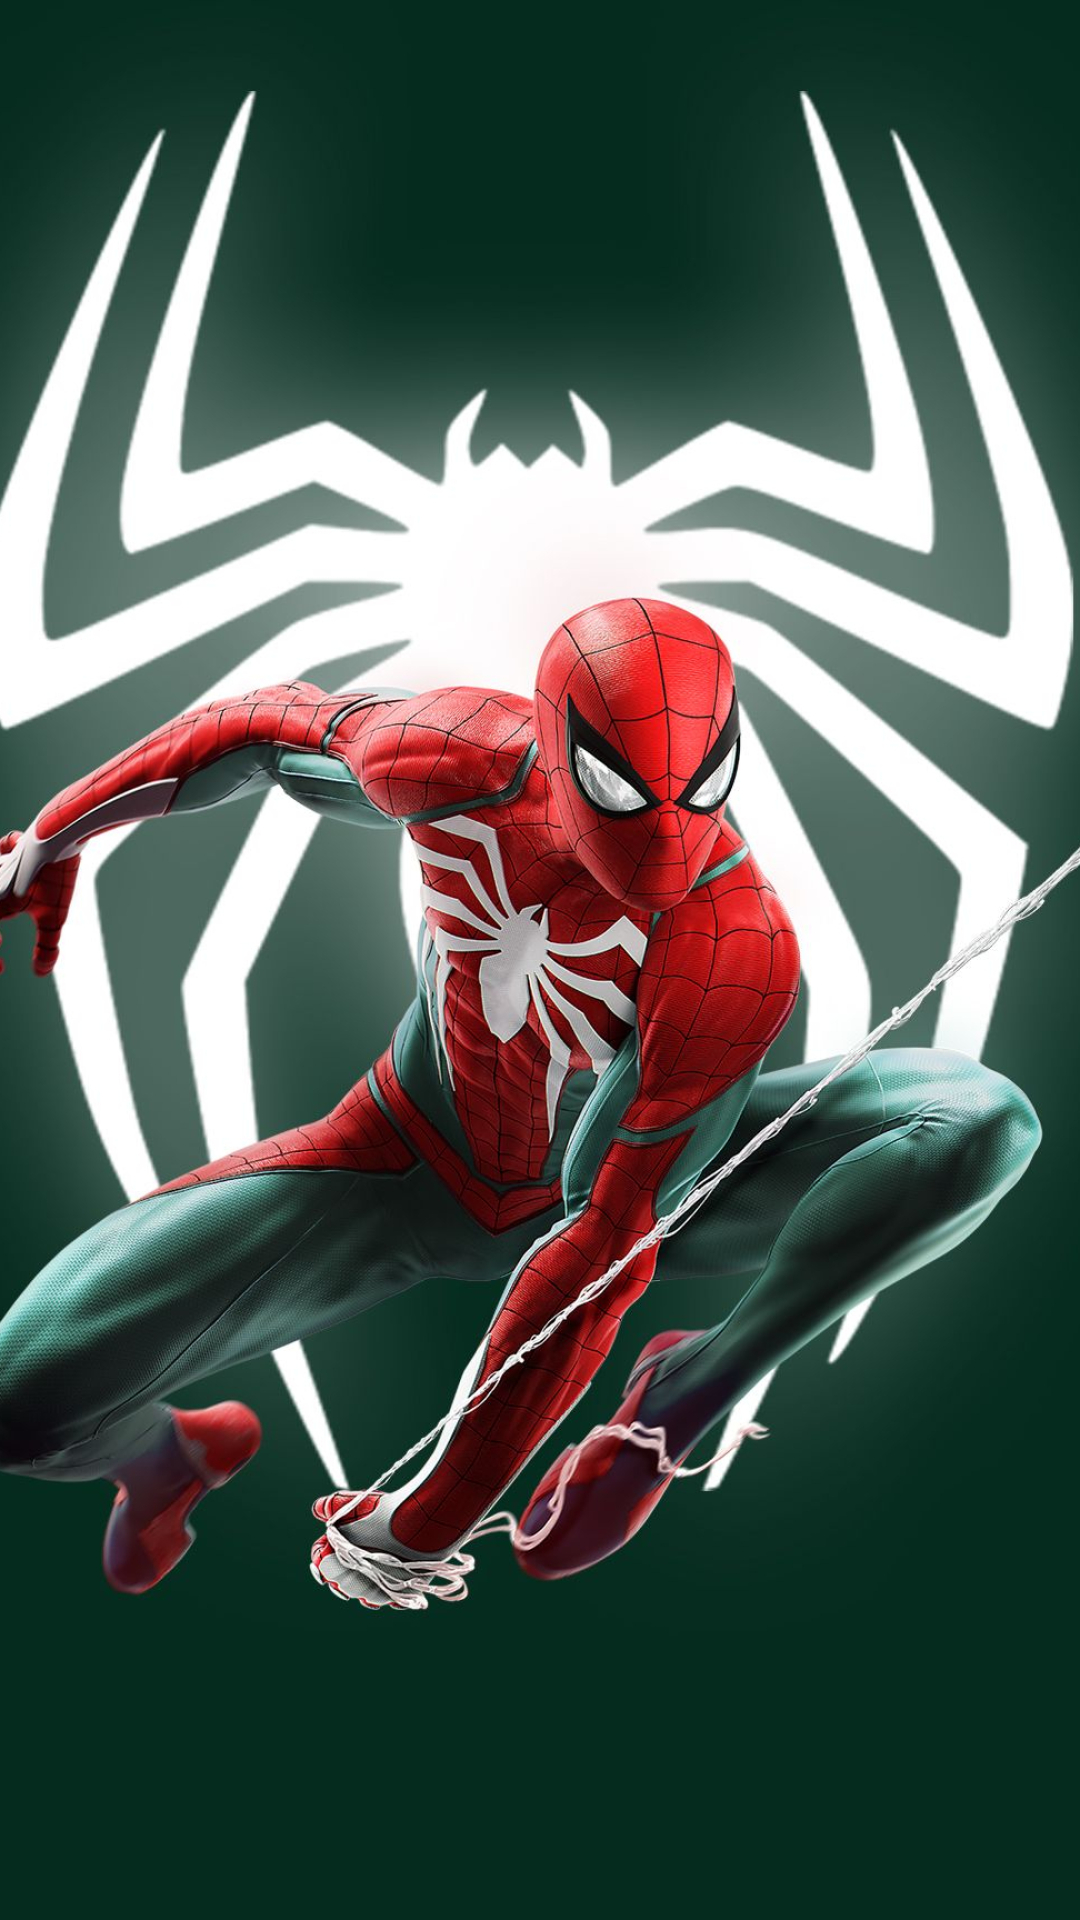 1080x1920 spider man wallpaper hd for phone | green bg | full HD | Spider-man wallpaper, Spiderman, Spiderman artwork